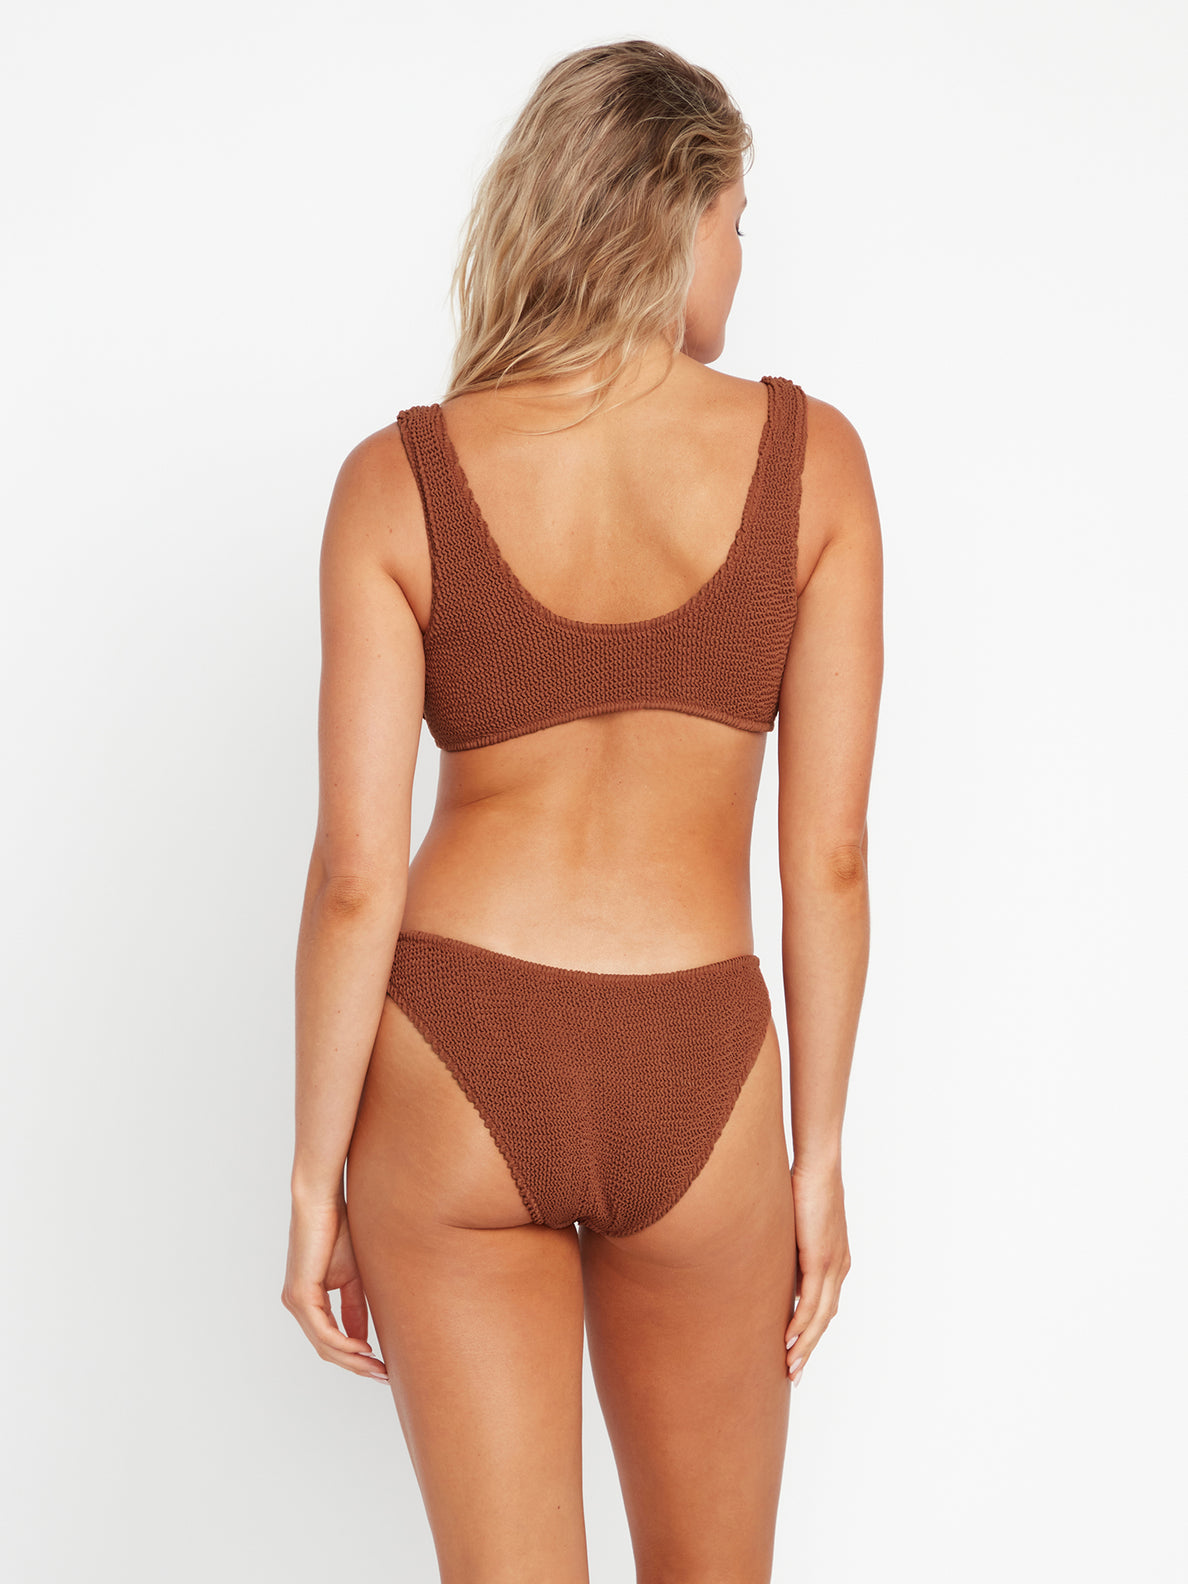 Simply Scrunch Scoop Bikini Top - Rustic Brown (O1022309_RBR) [B]